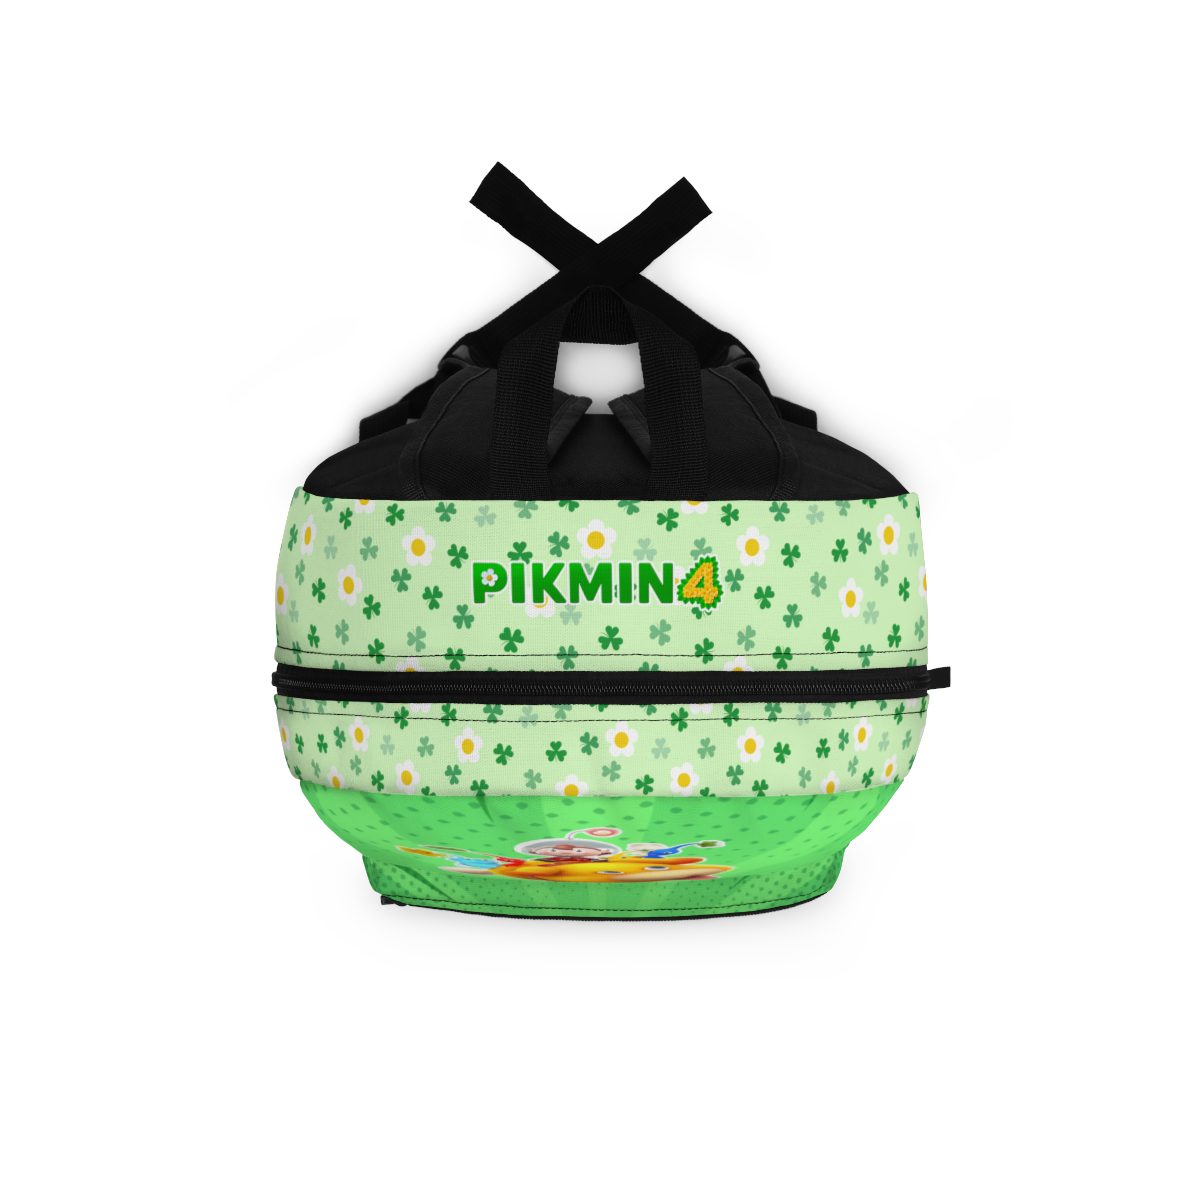 PIKMIN 4 Video Game Light Green Backpack Cool Kiddo 16